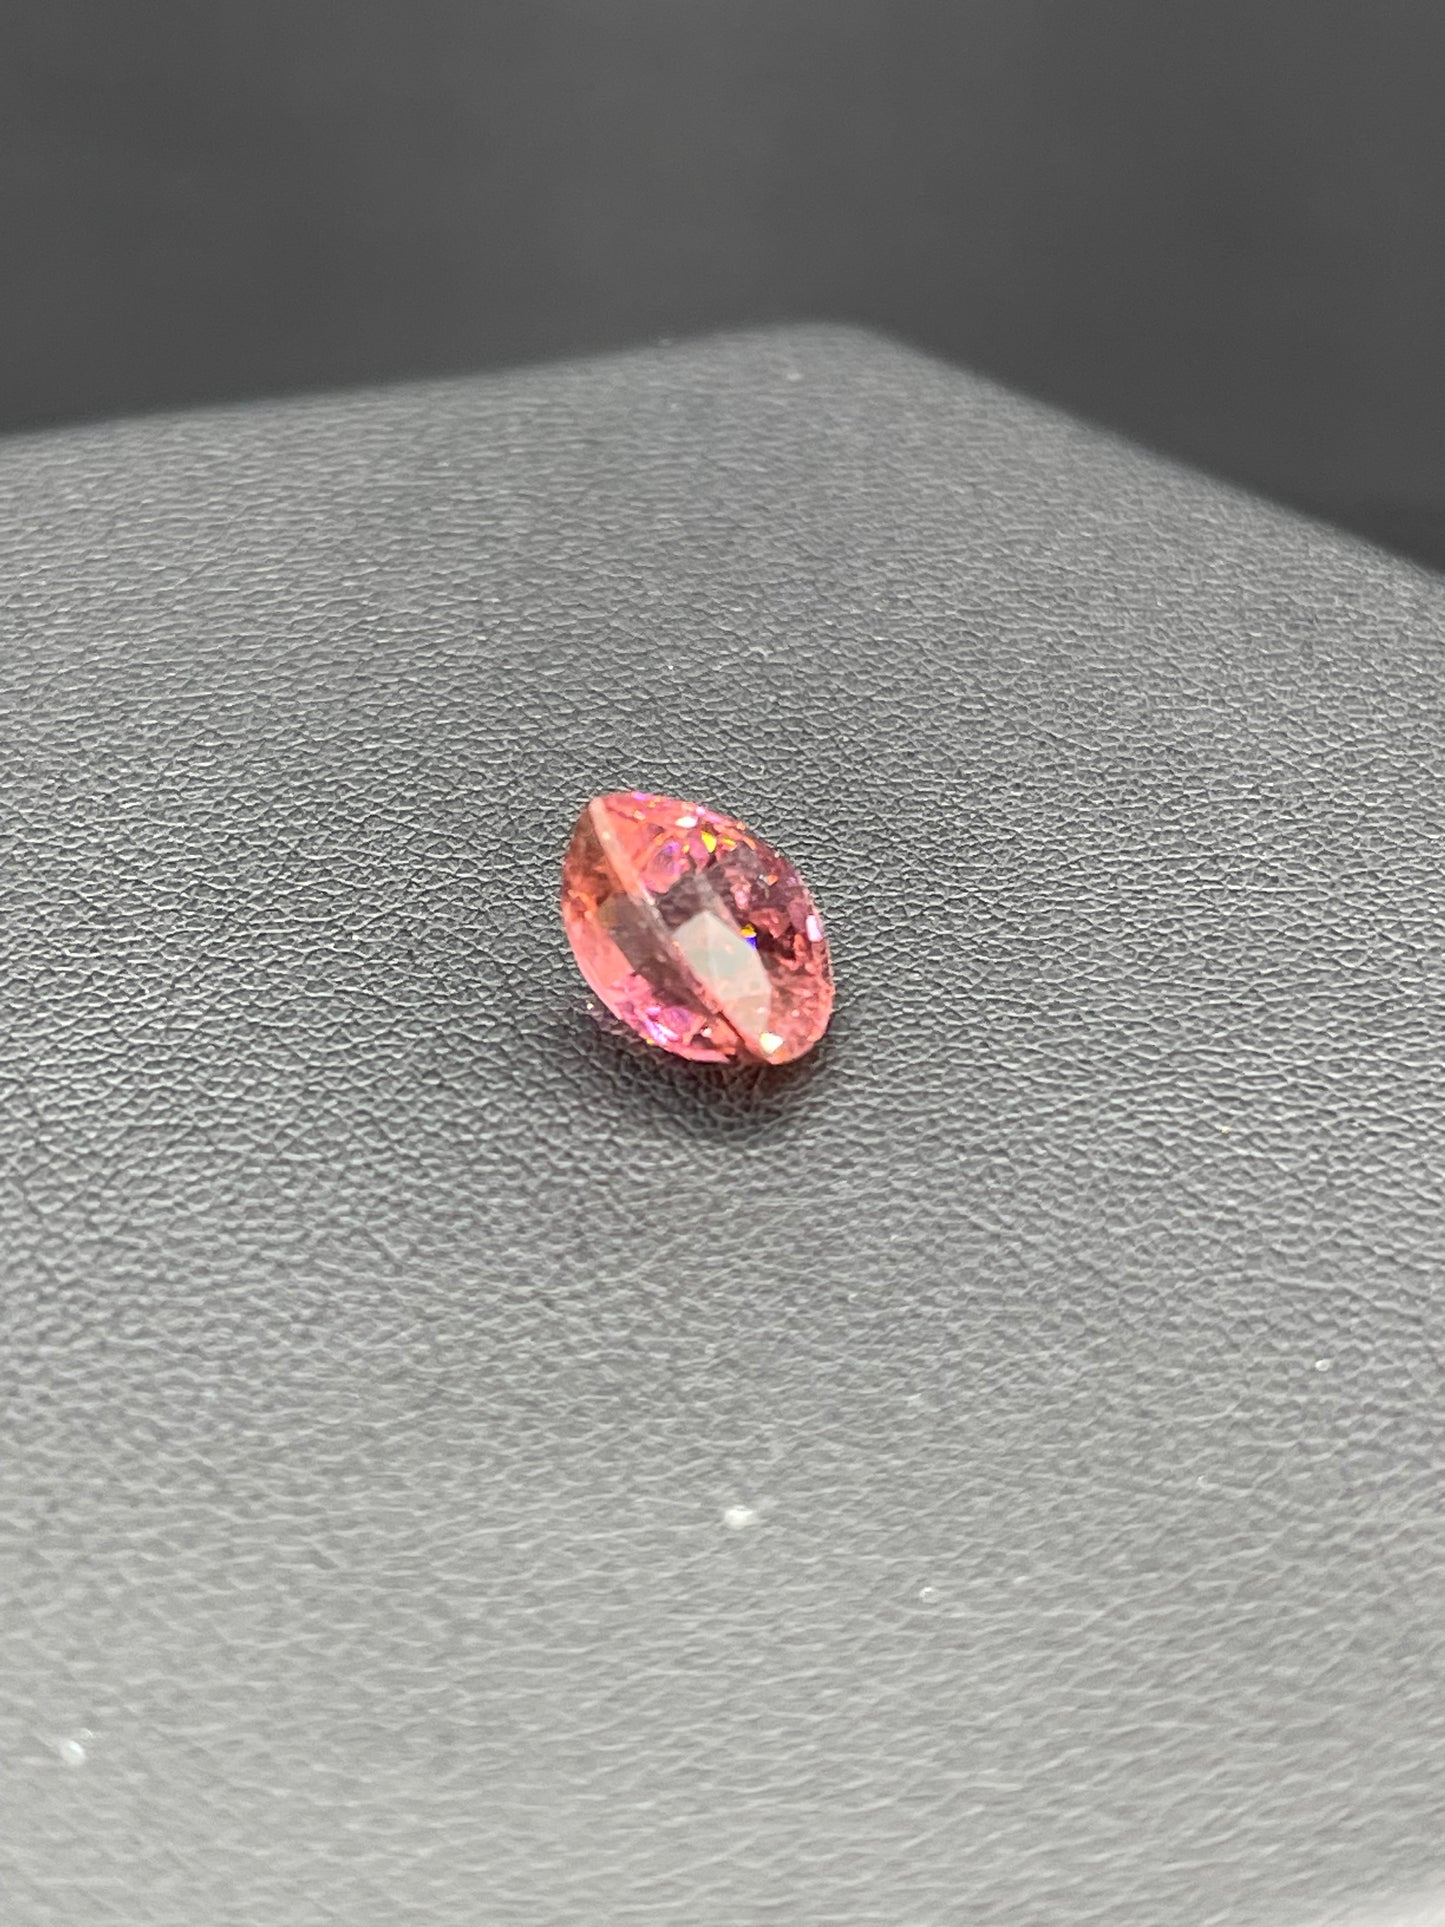 4.74 Carat Natural Rubellite Tourmaline Pear Cut Loose Gemstone (11.14 x 10.01 x 7.10 MM)